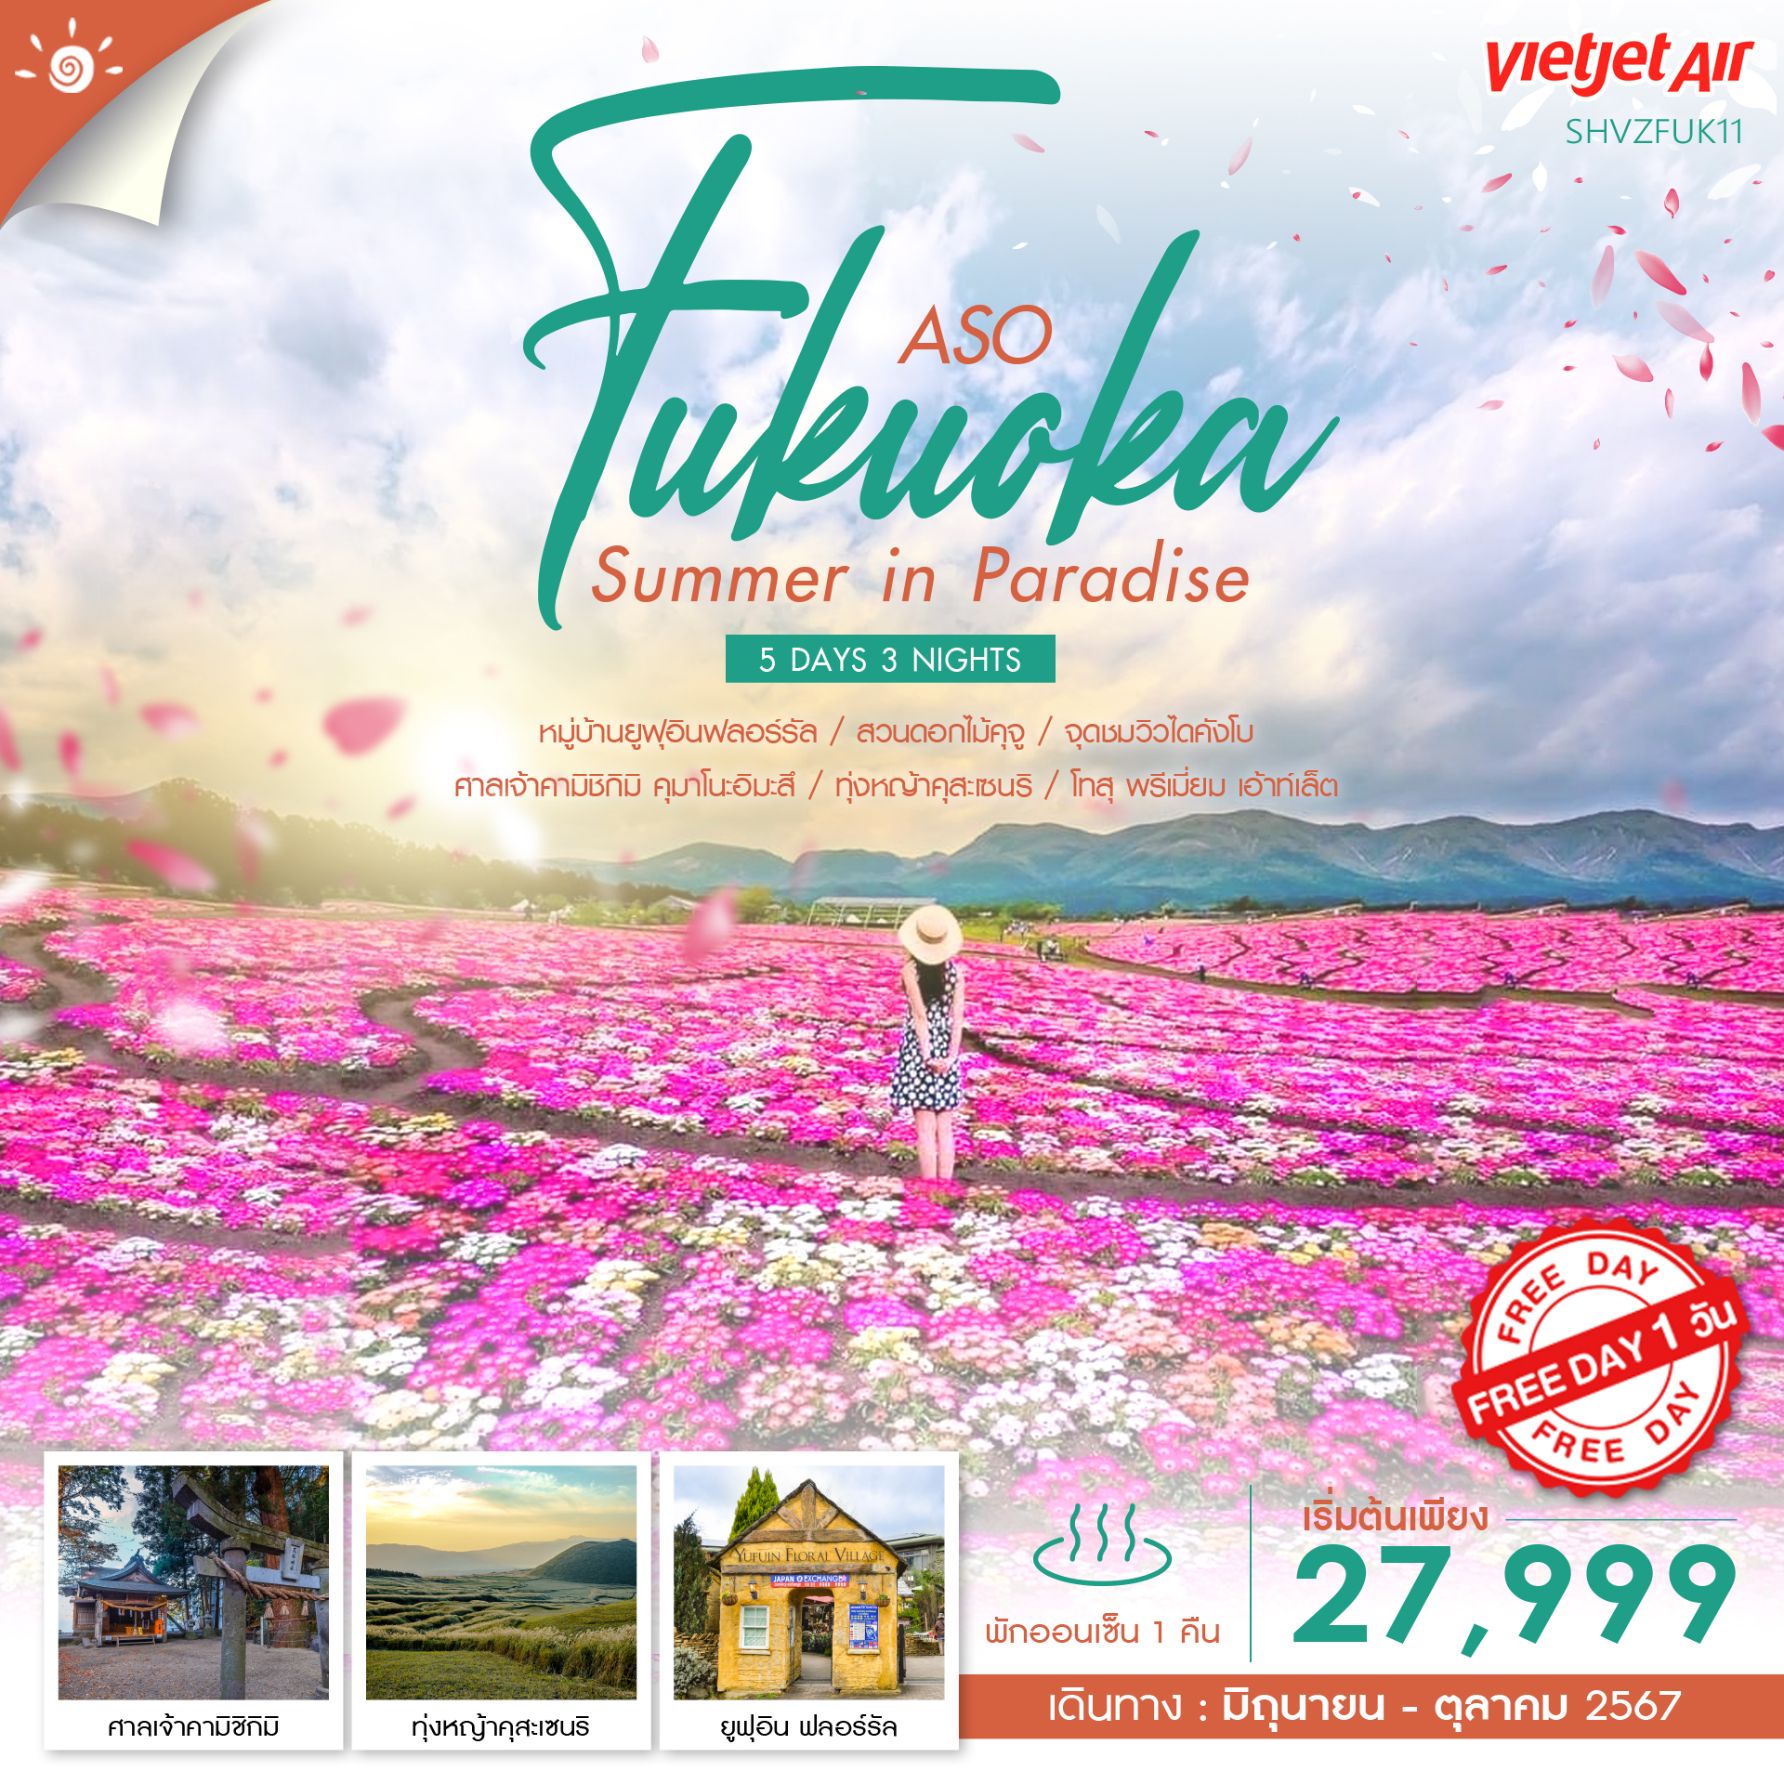 Fukuoka Summer in Paradise ฟุกุโอกะ 5 วัน 3 คืน เดินทาง มิถุนายน - ตุลาคม 67 เริ่มต้น 27,999.- Vietjet Air (VZ)